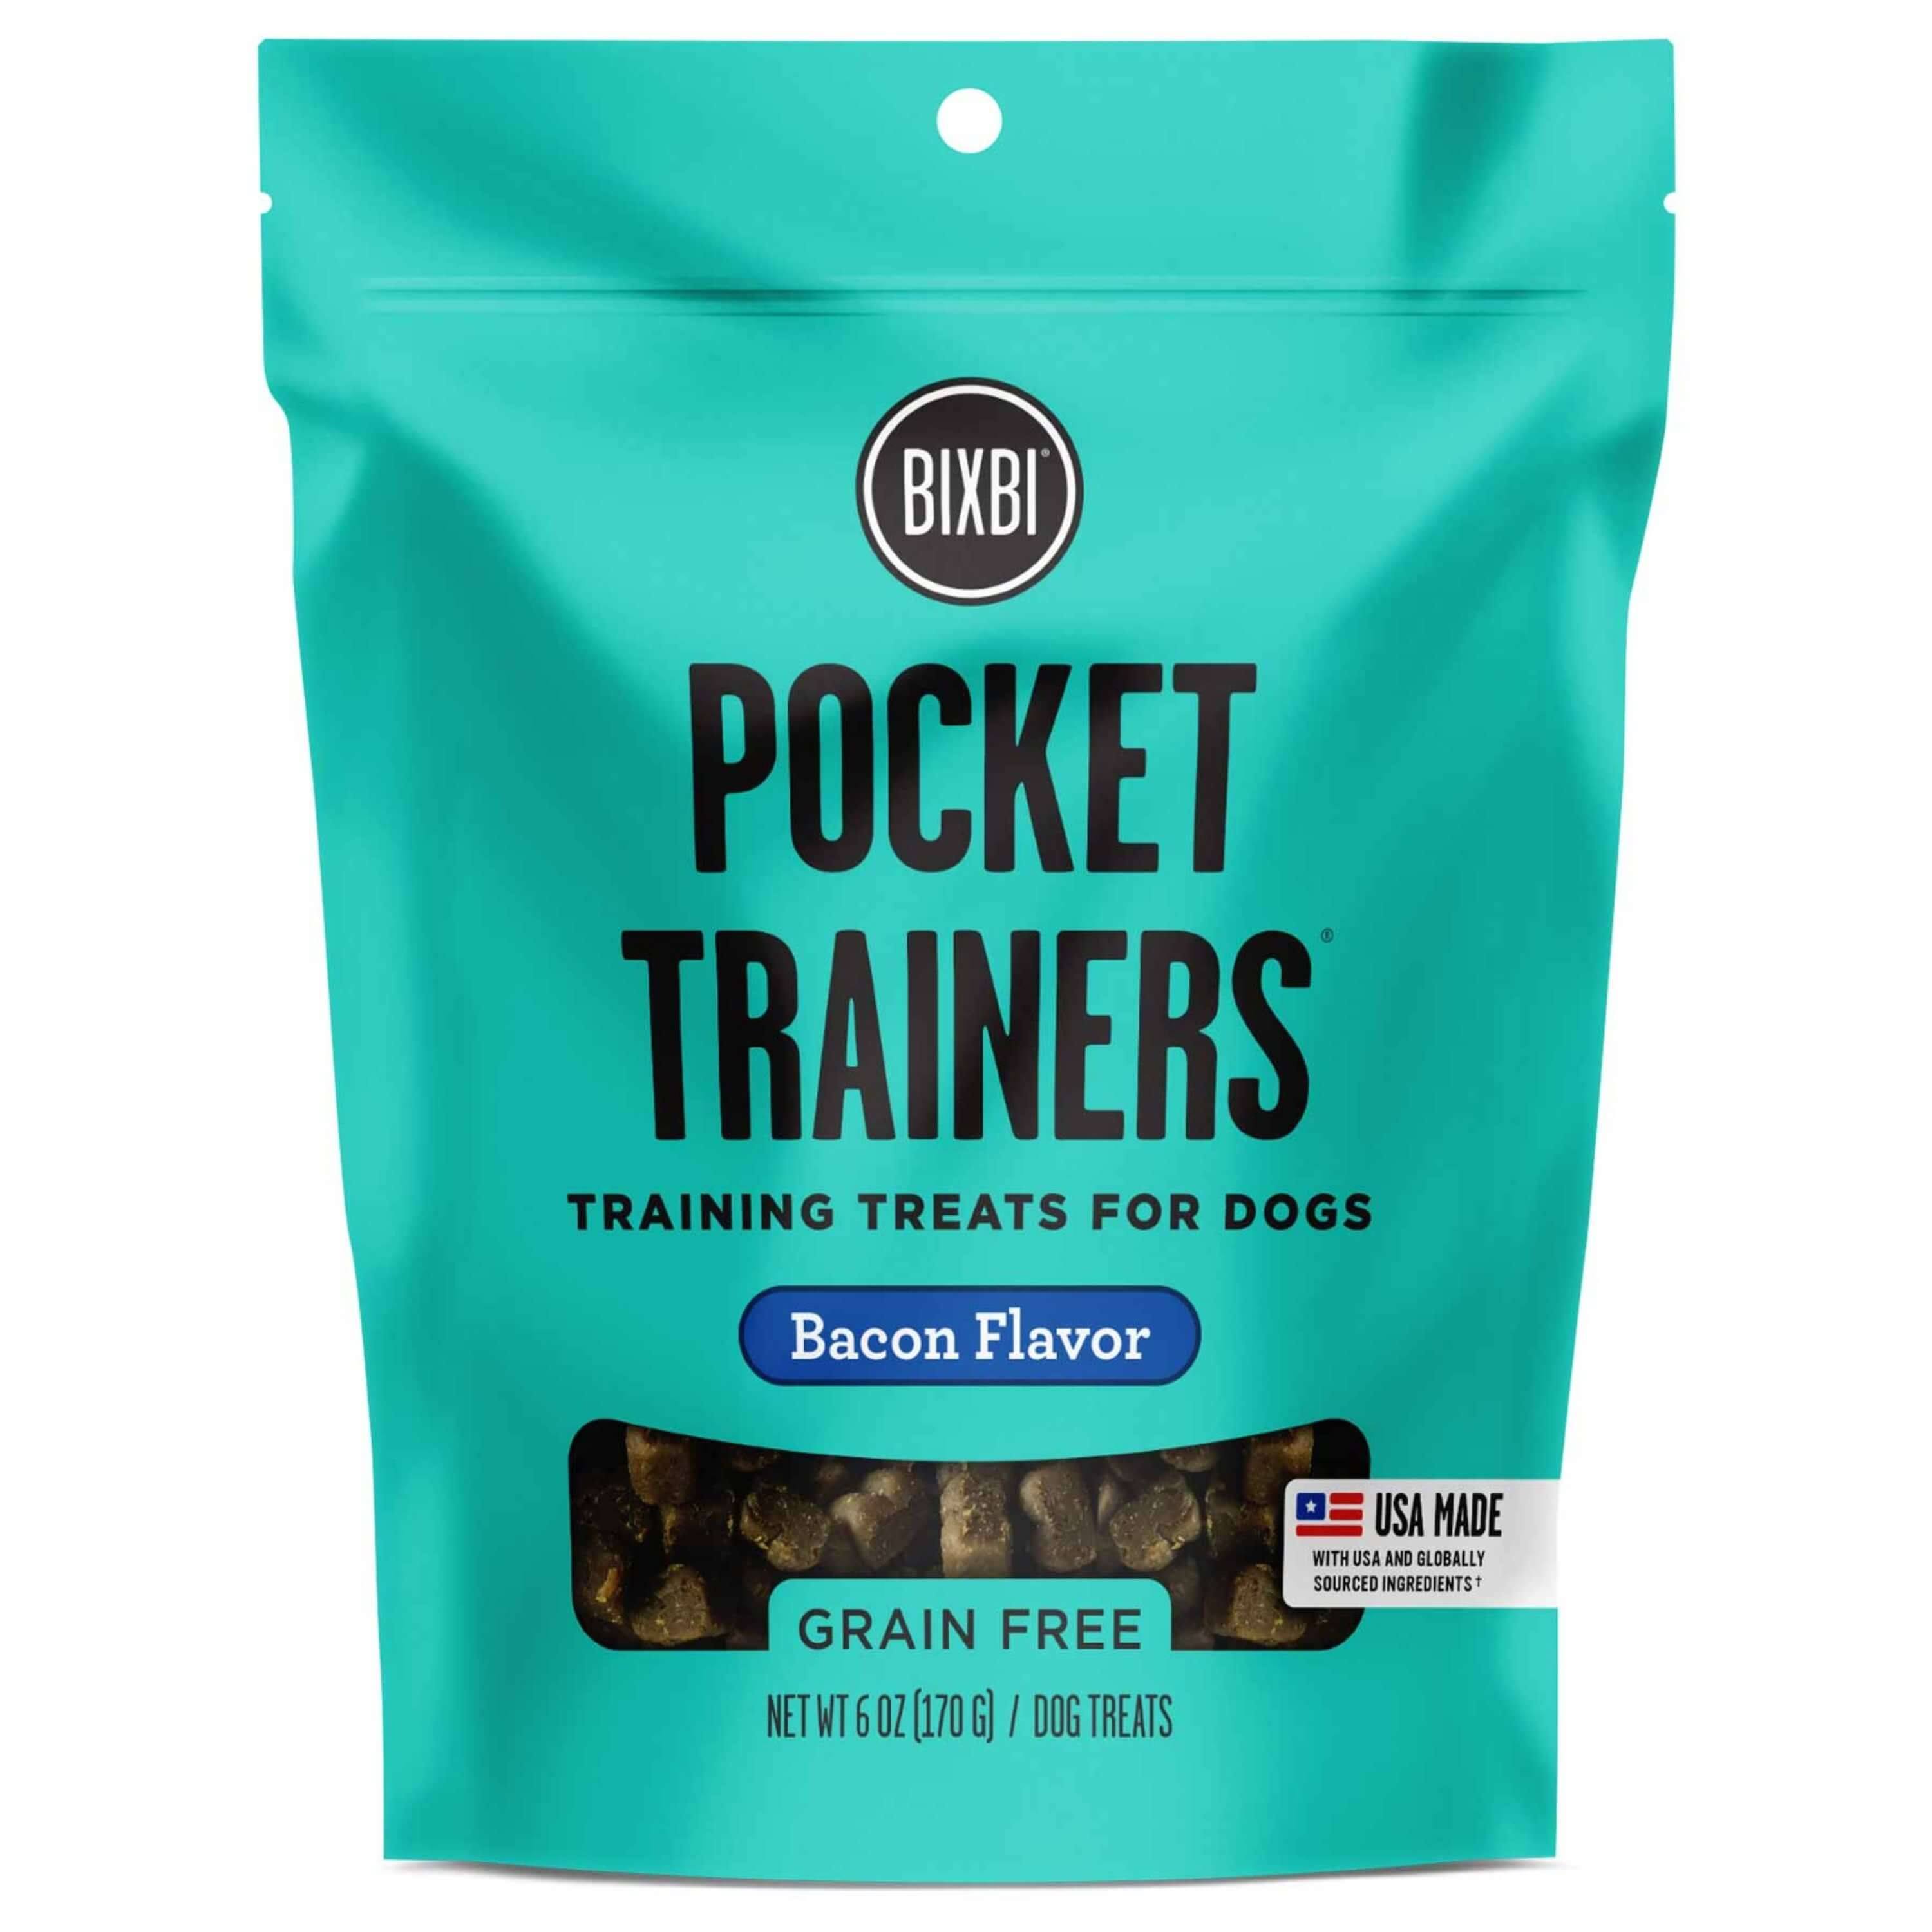 BIXBI Pocket Trainers Bacon Flavor Dog Treats - 6 oz. Bag